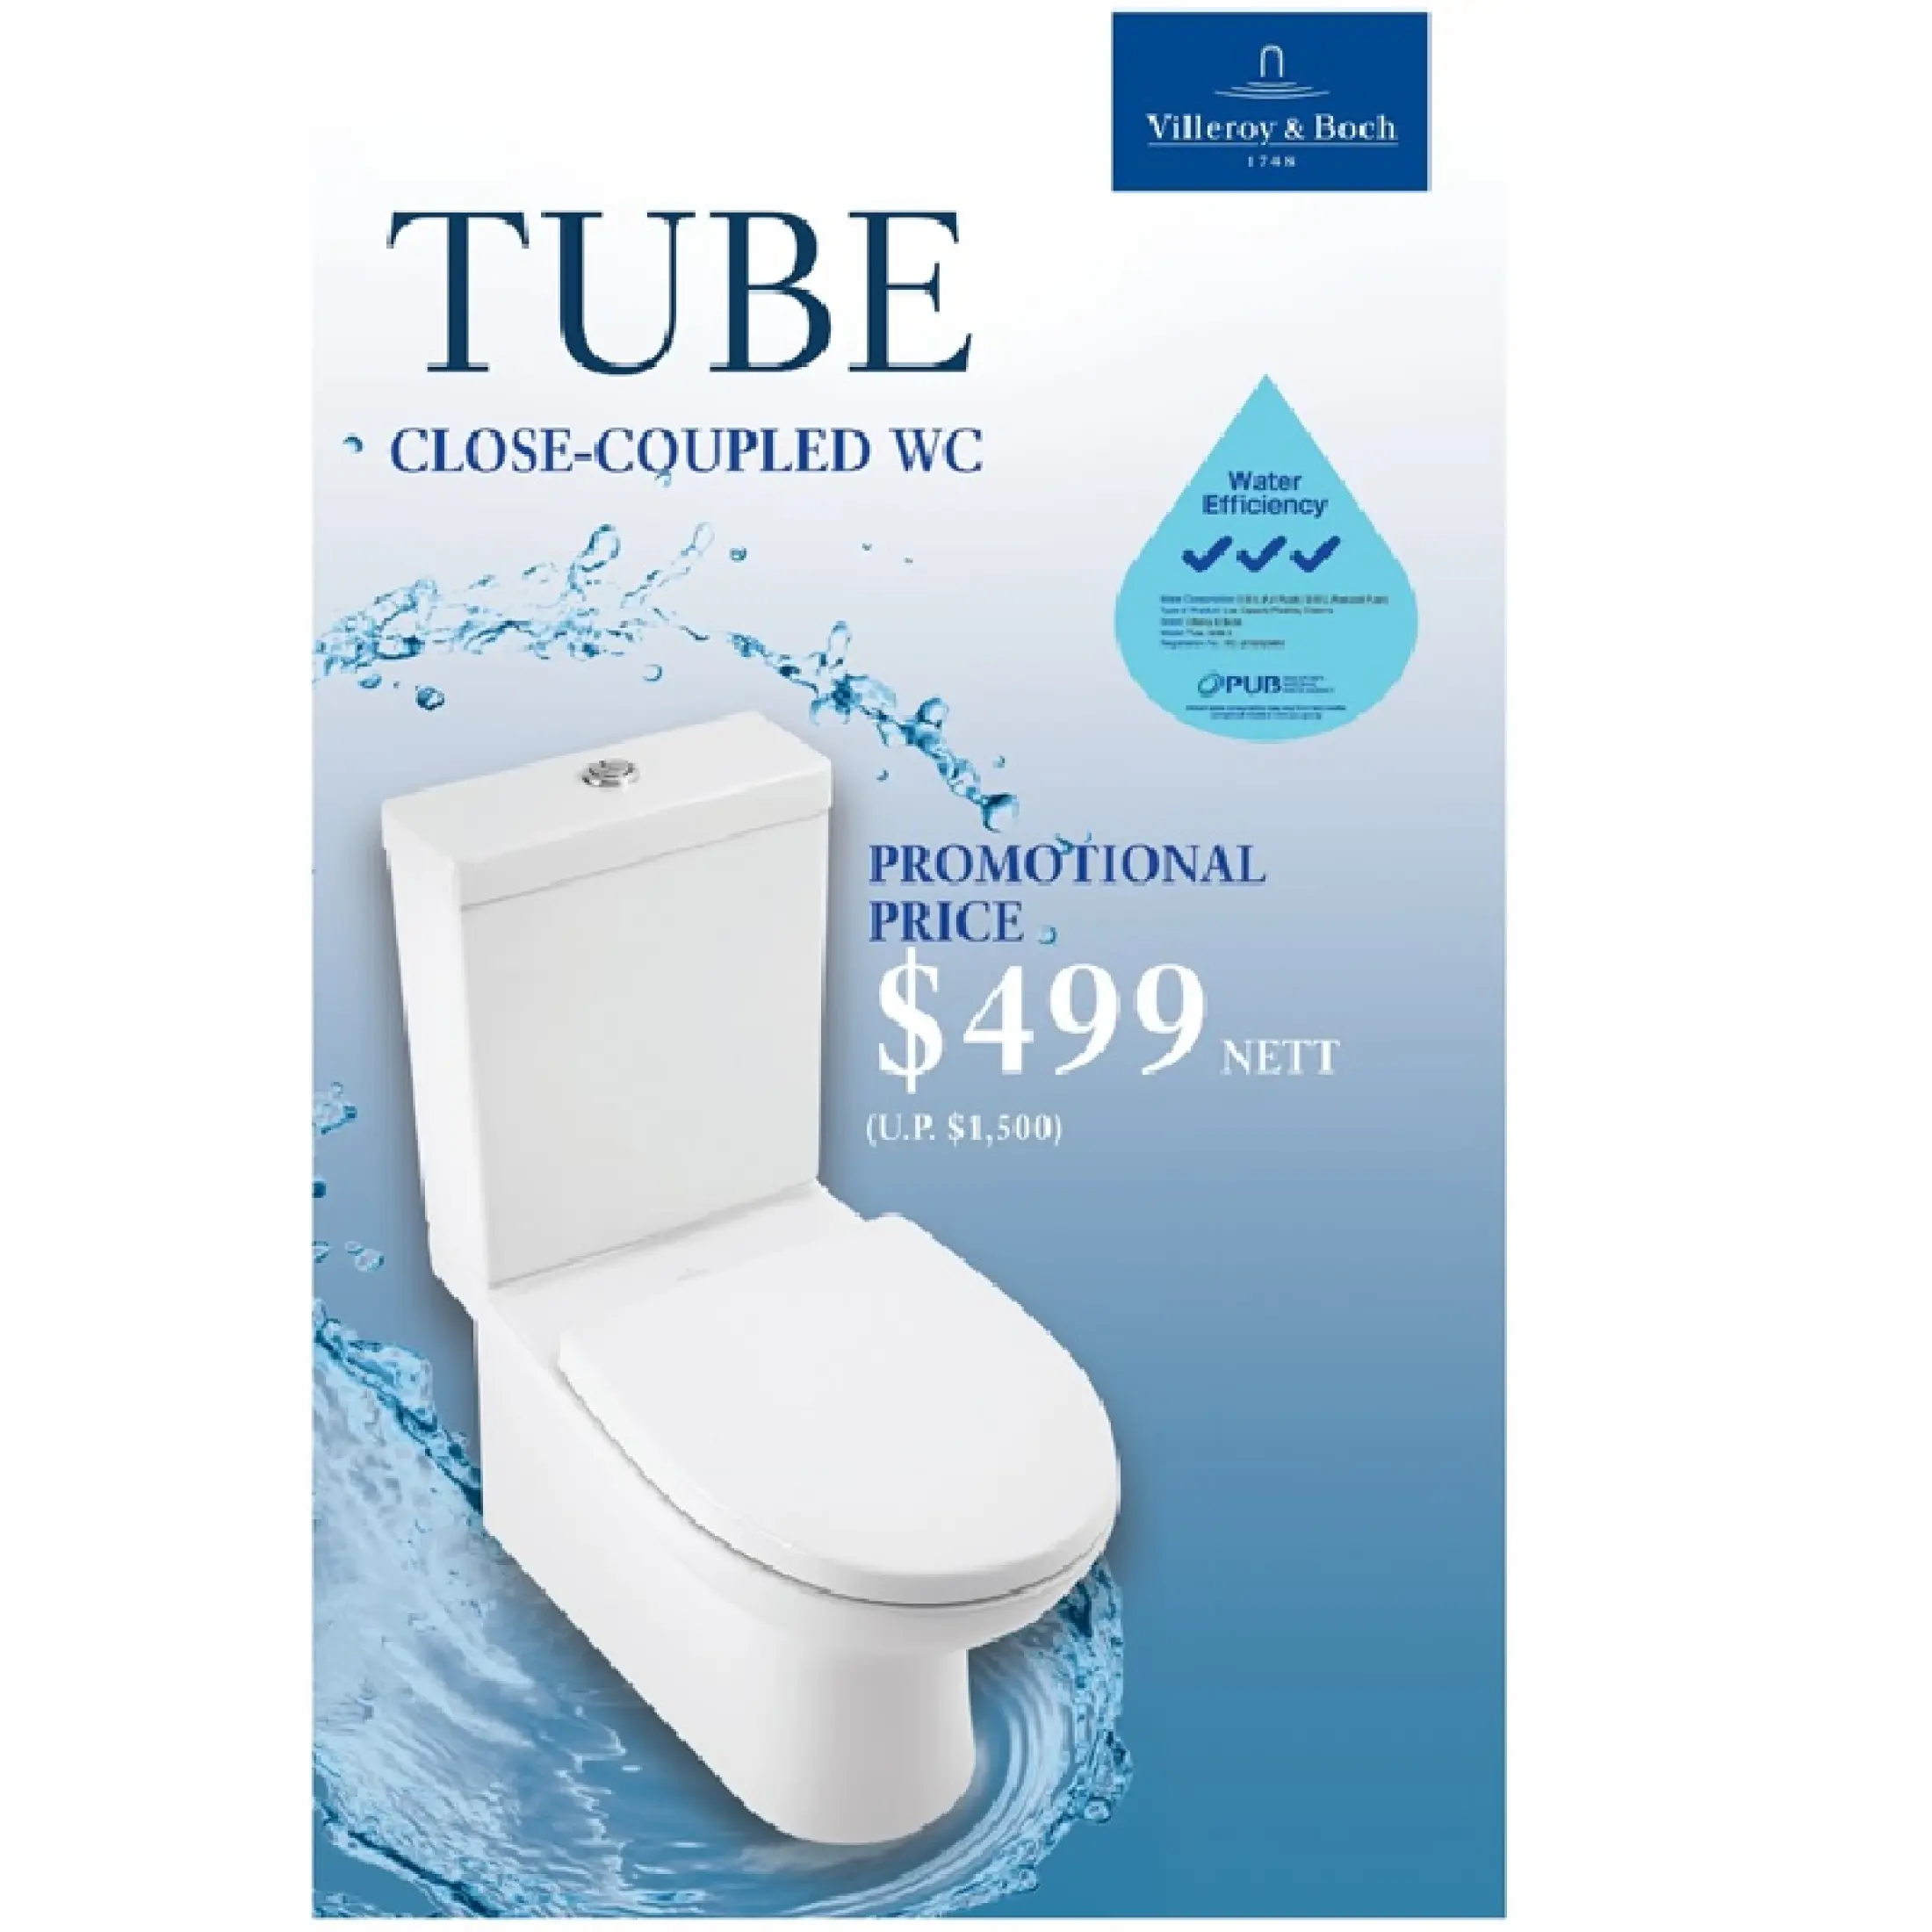 Villeroy & Boch Tube Toilet Bowl c/w Soft-close Seat & Cover | Singapore